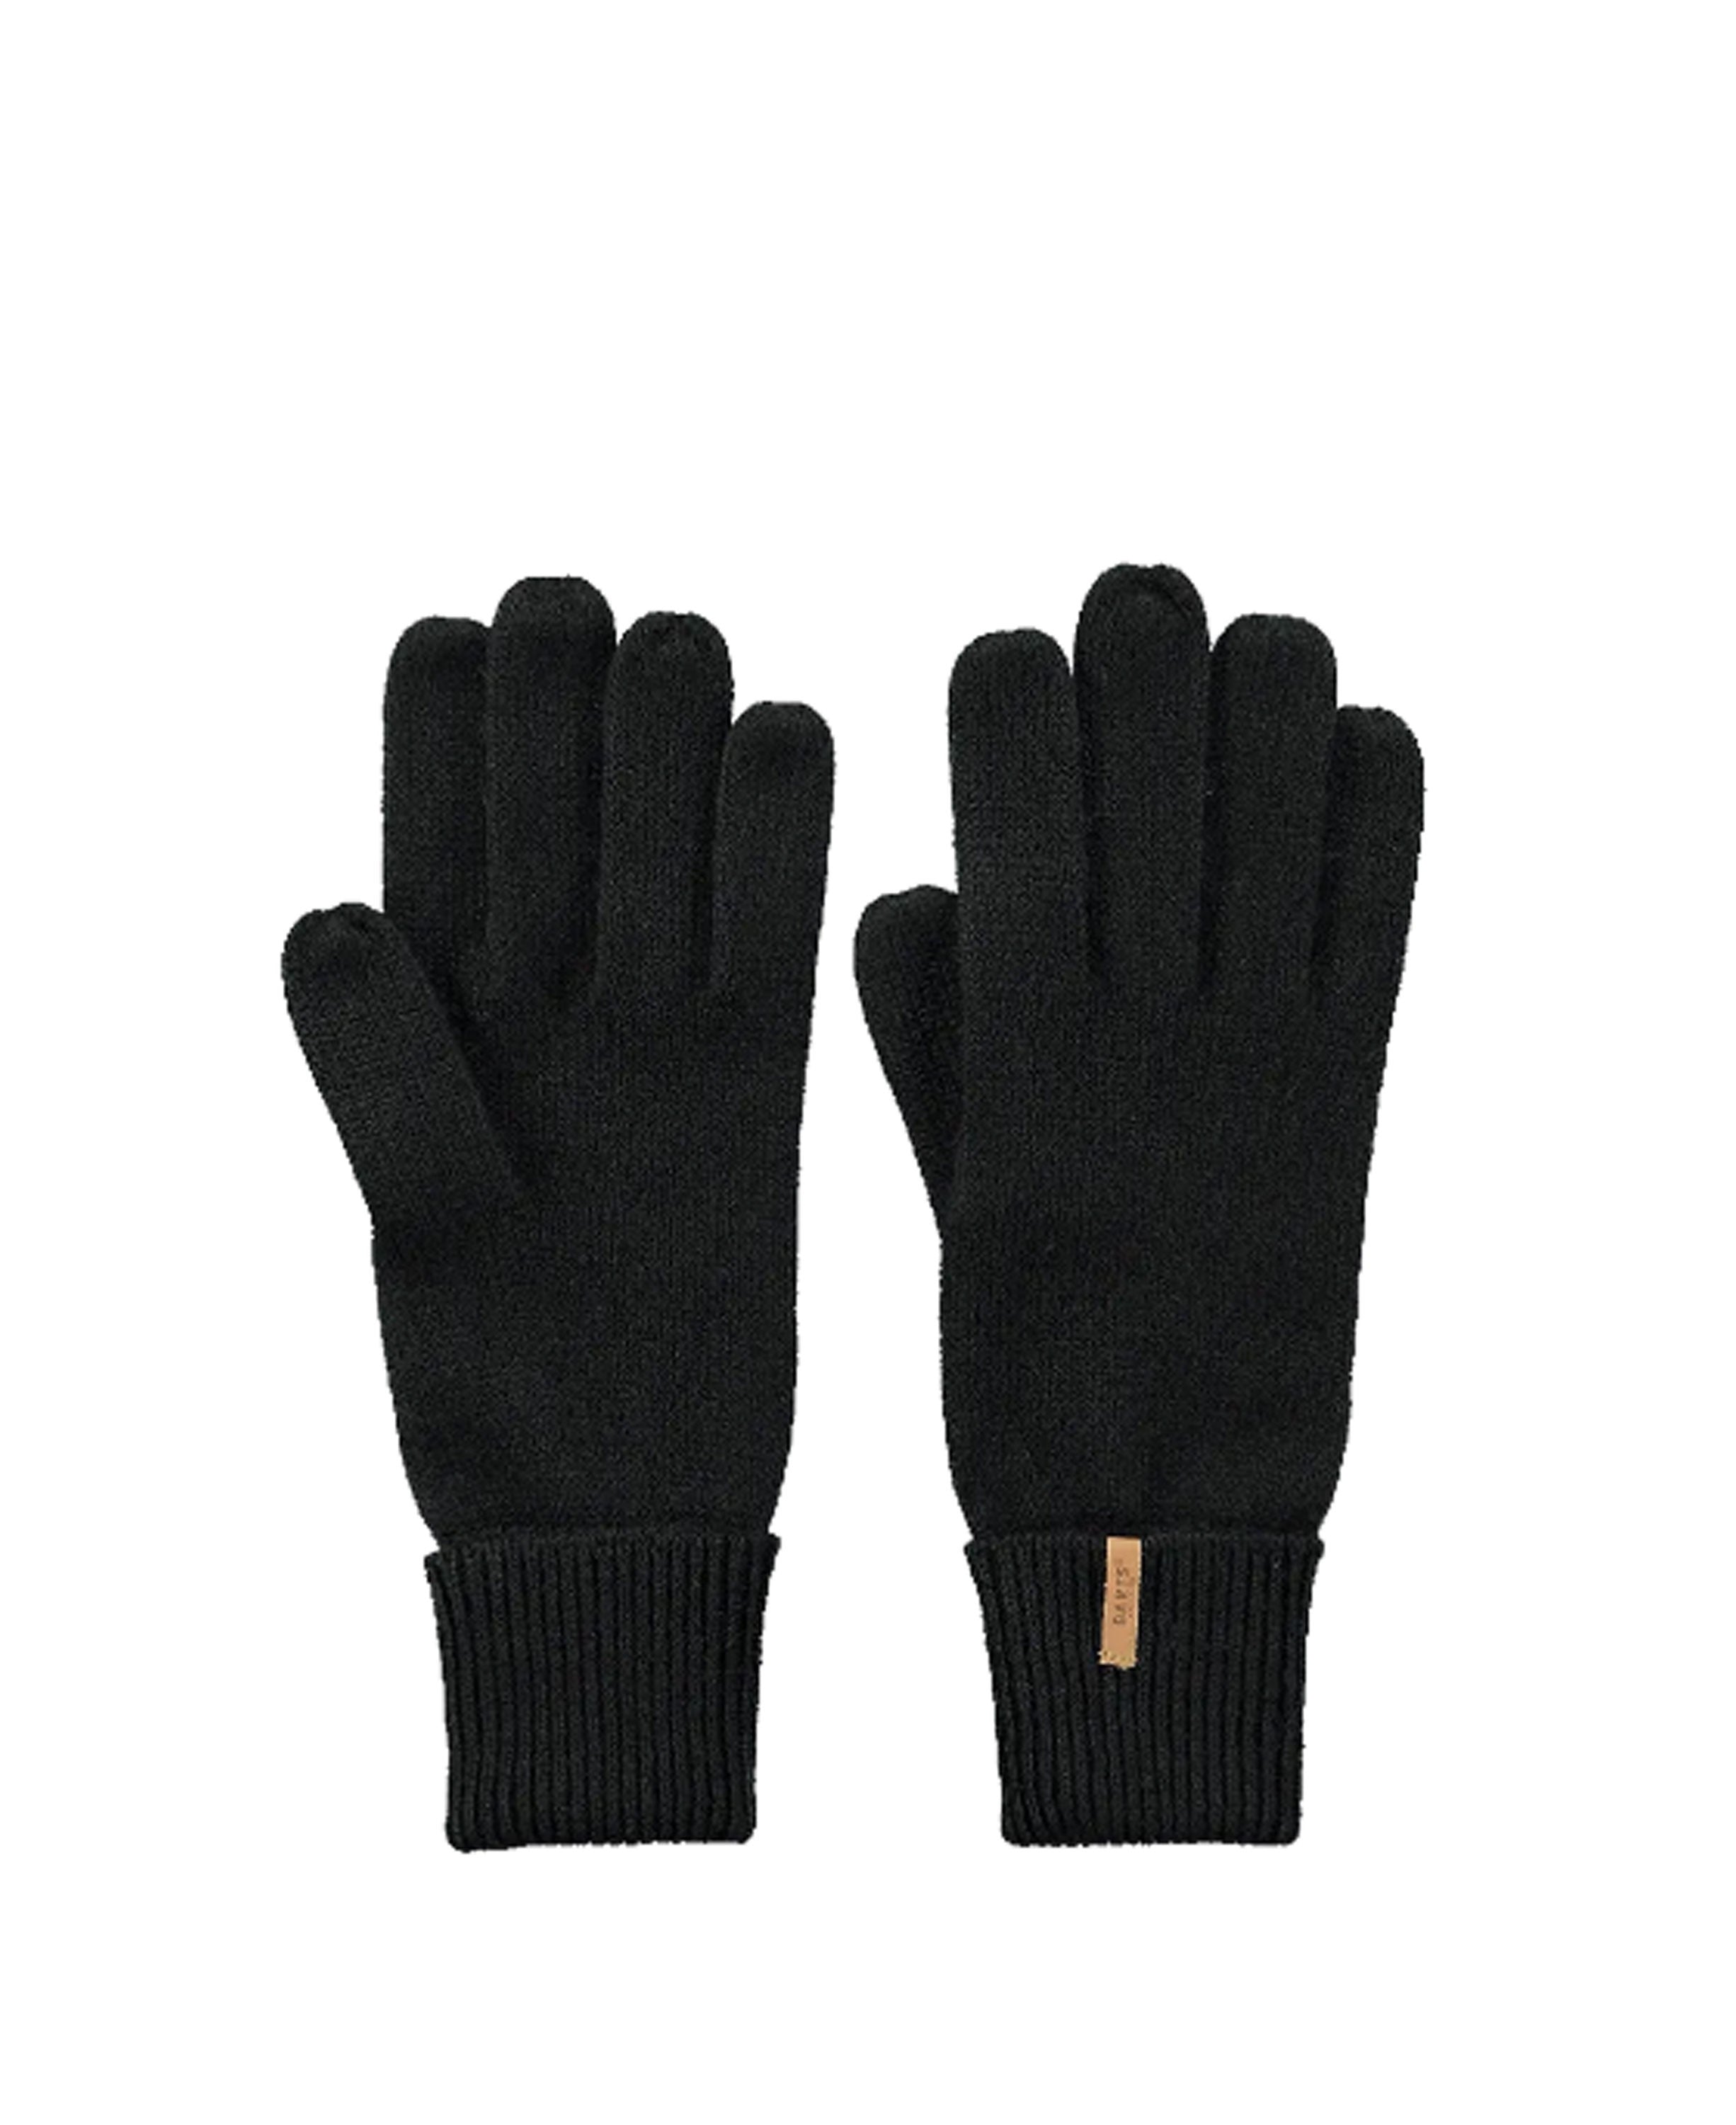 Fine Knitted Gloves - Black